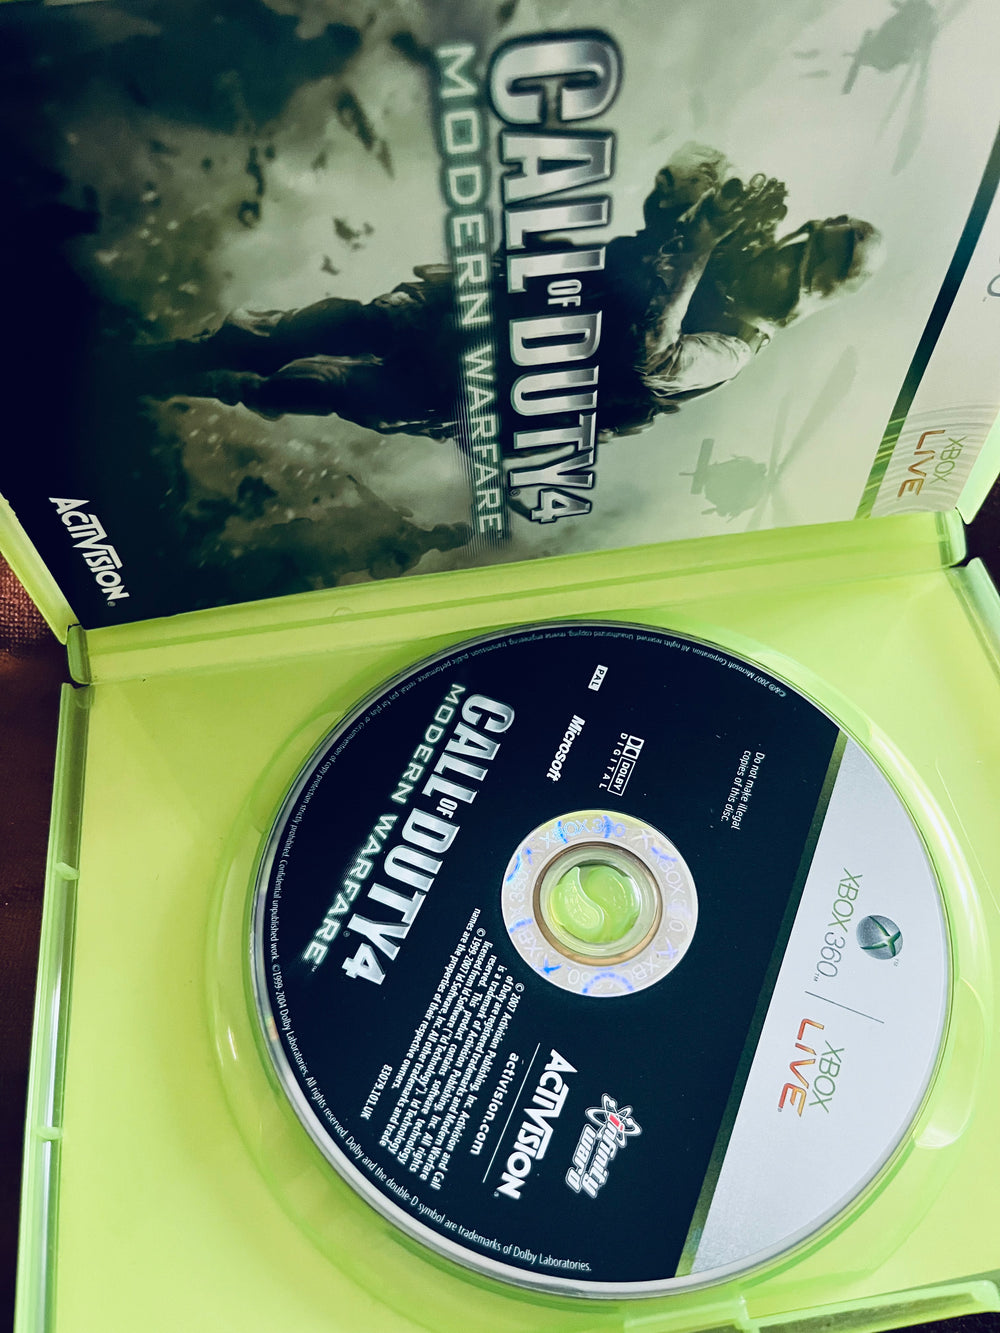 Call of Duty 4 - Modern Warfare. Xbox 360.